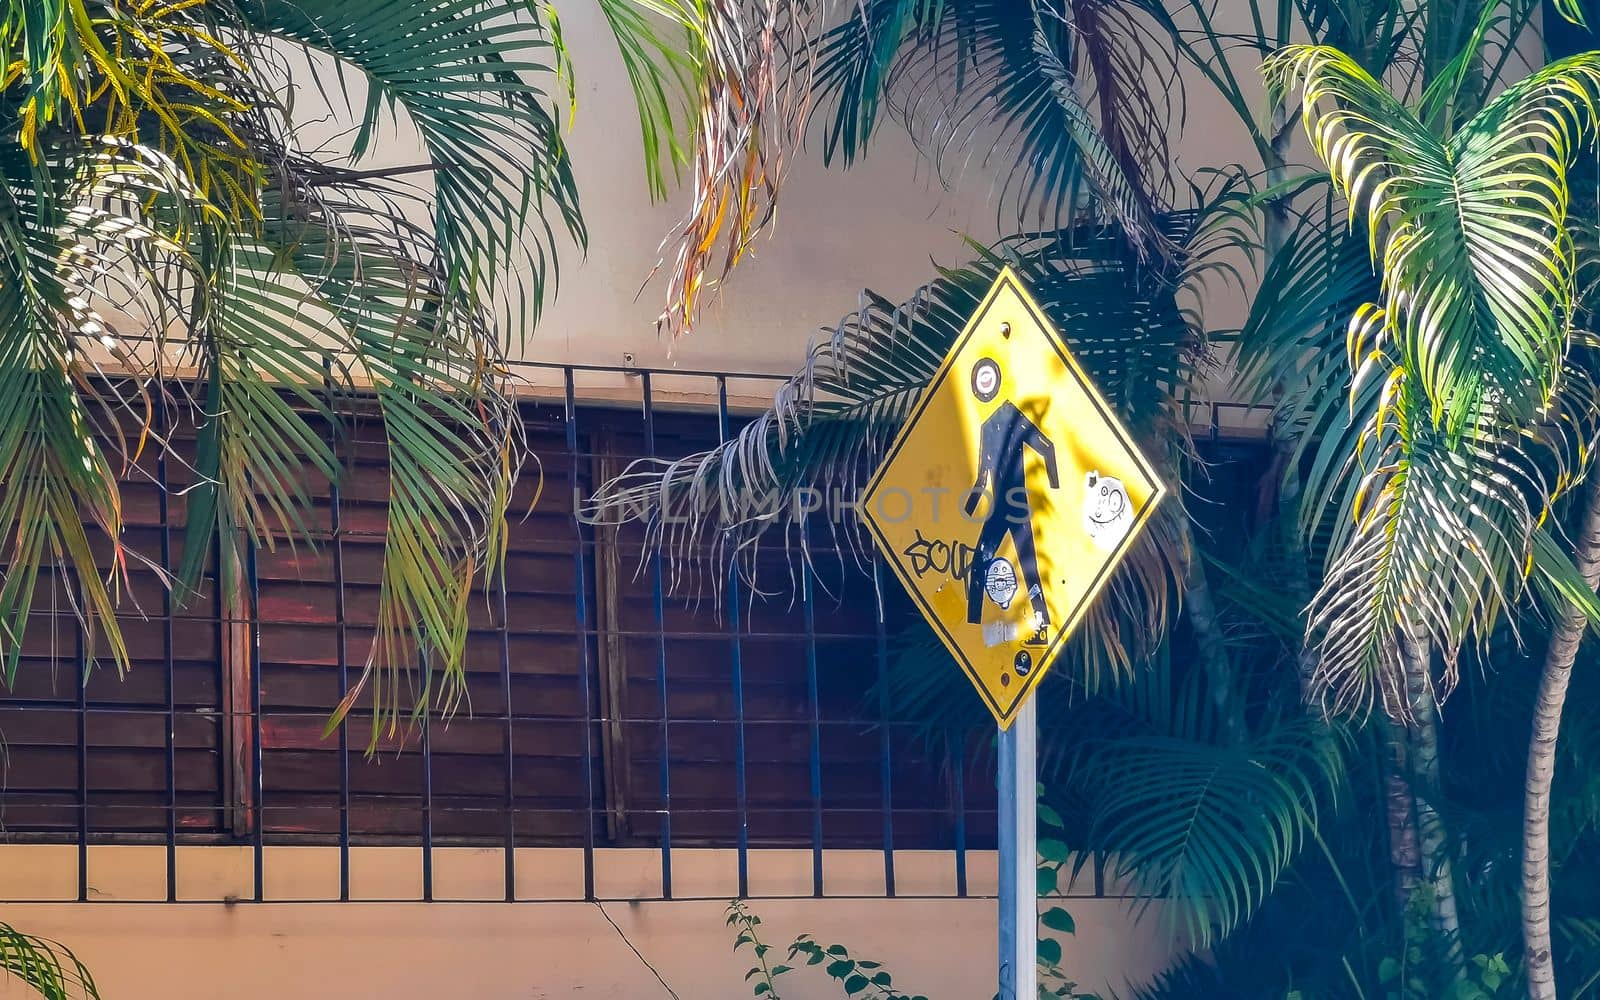 Yellow pedestrian sign street signin Playa del Carmen Mexico. by Arkadij